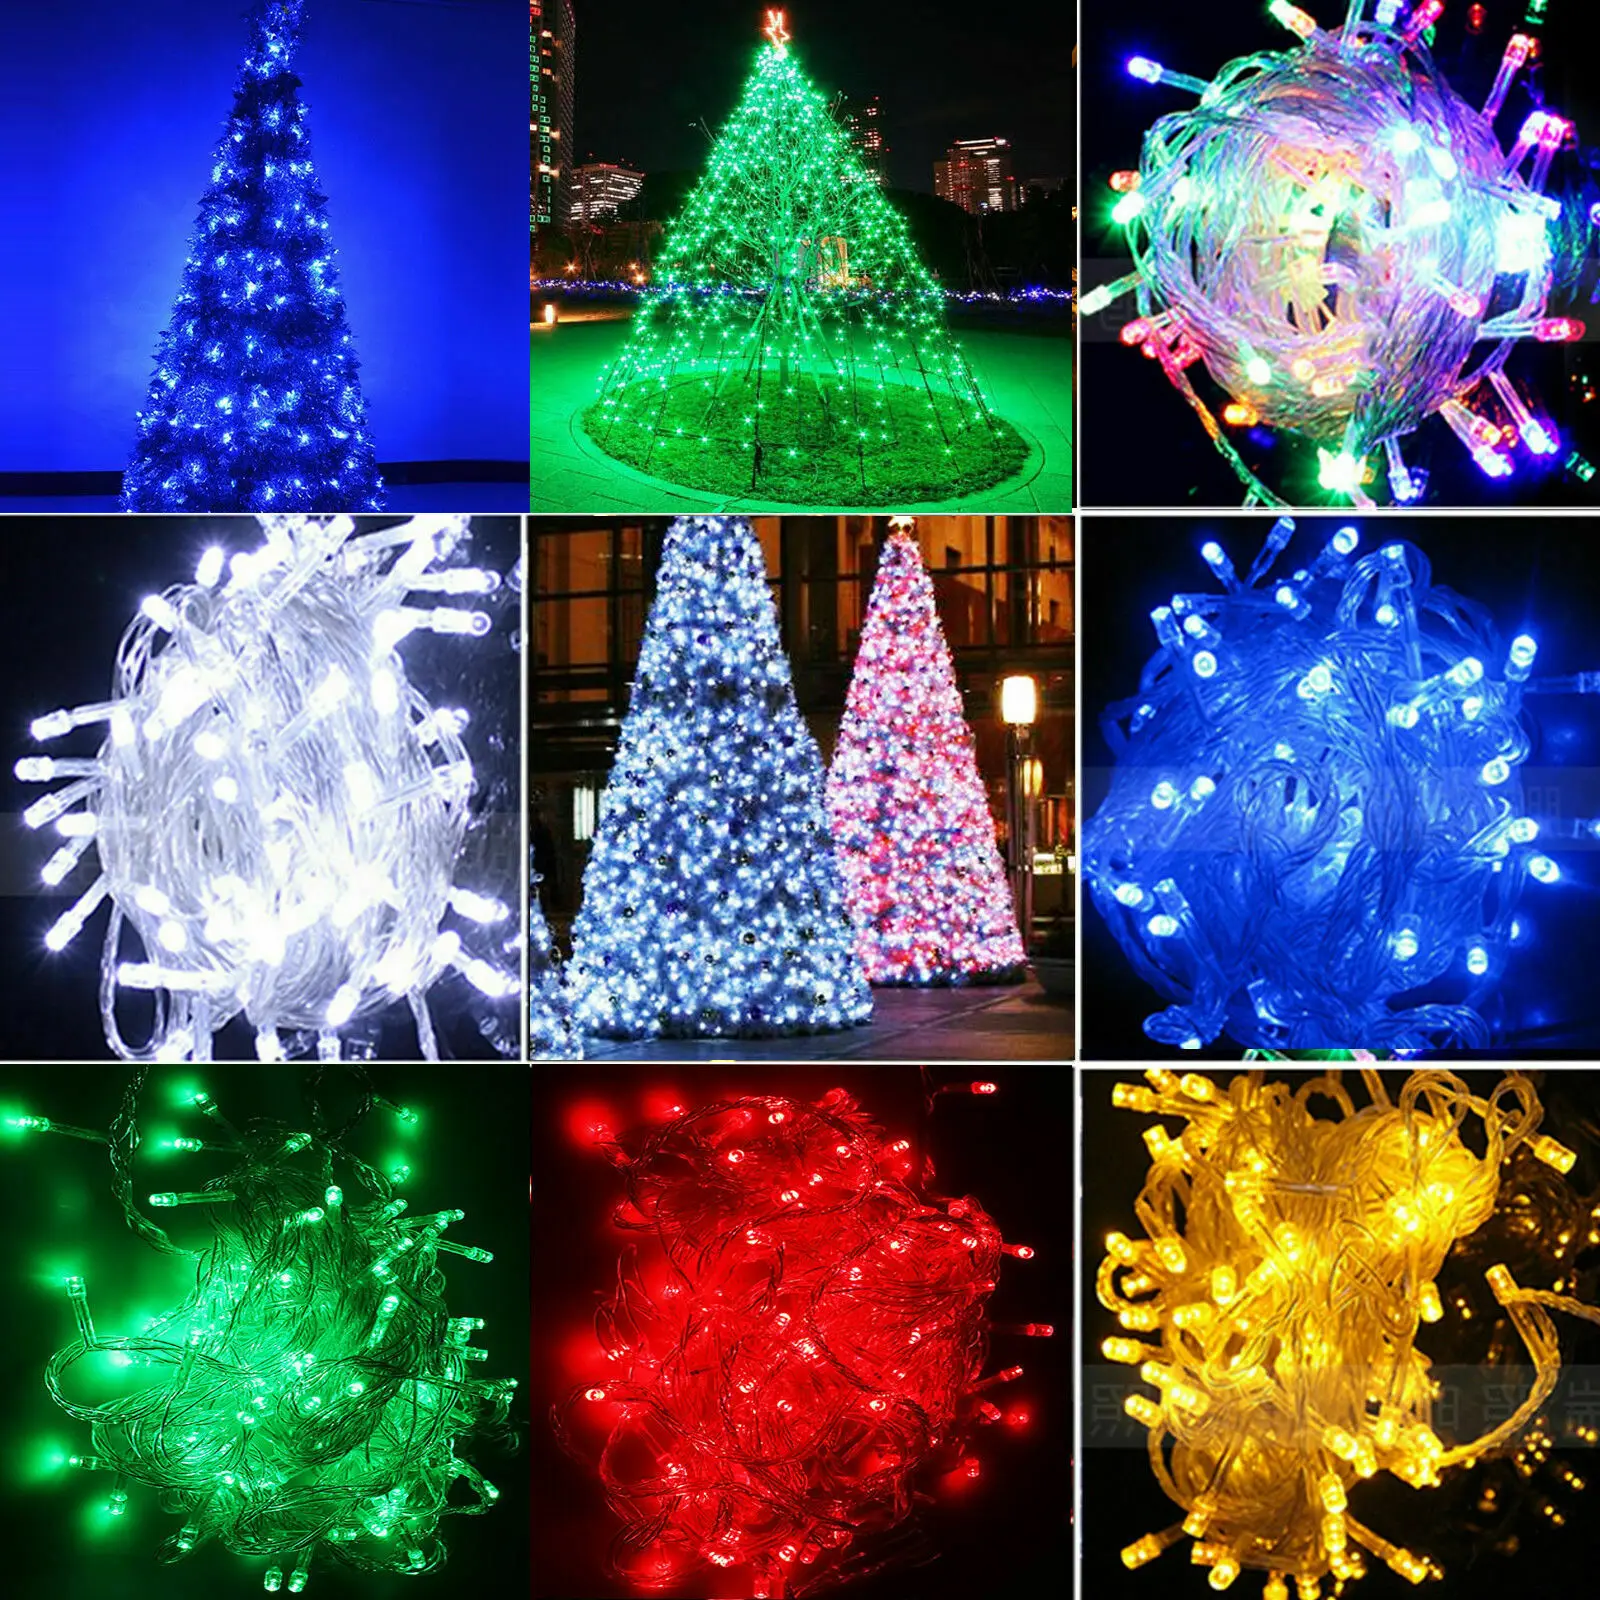 10M 100 LED Christmas Tree Fairy String Party Lights Lamp Xmas Festival Decor US 